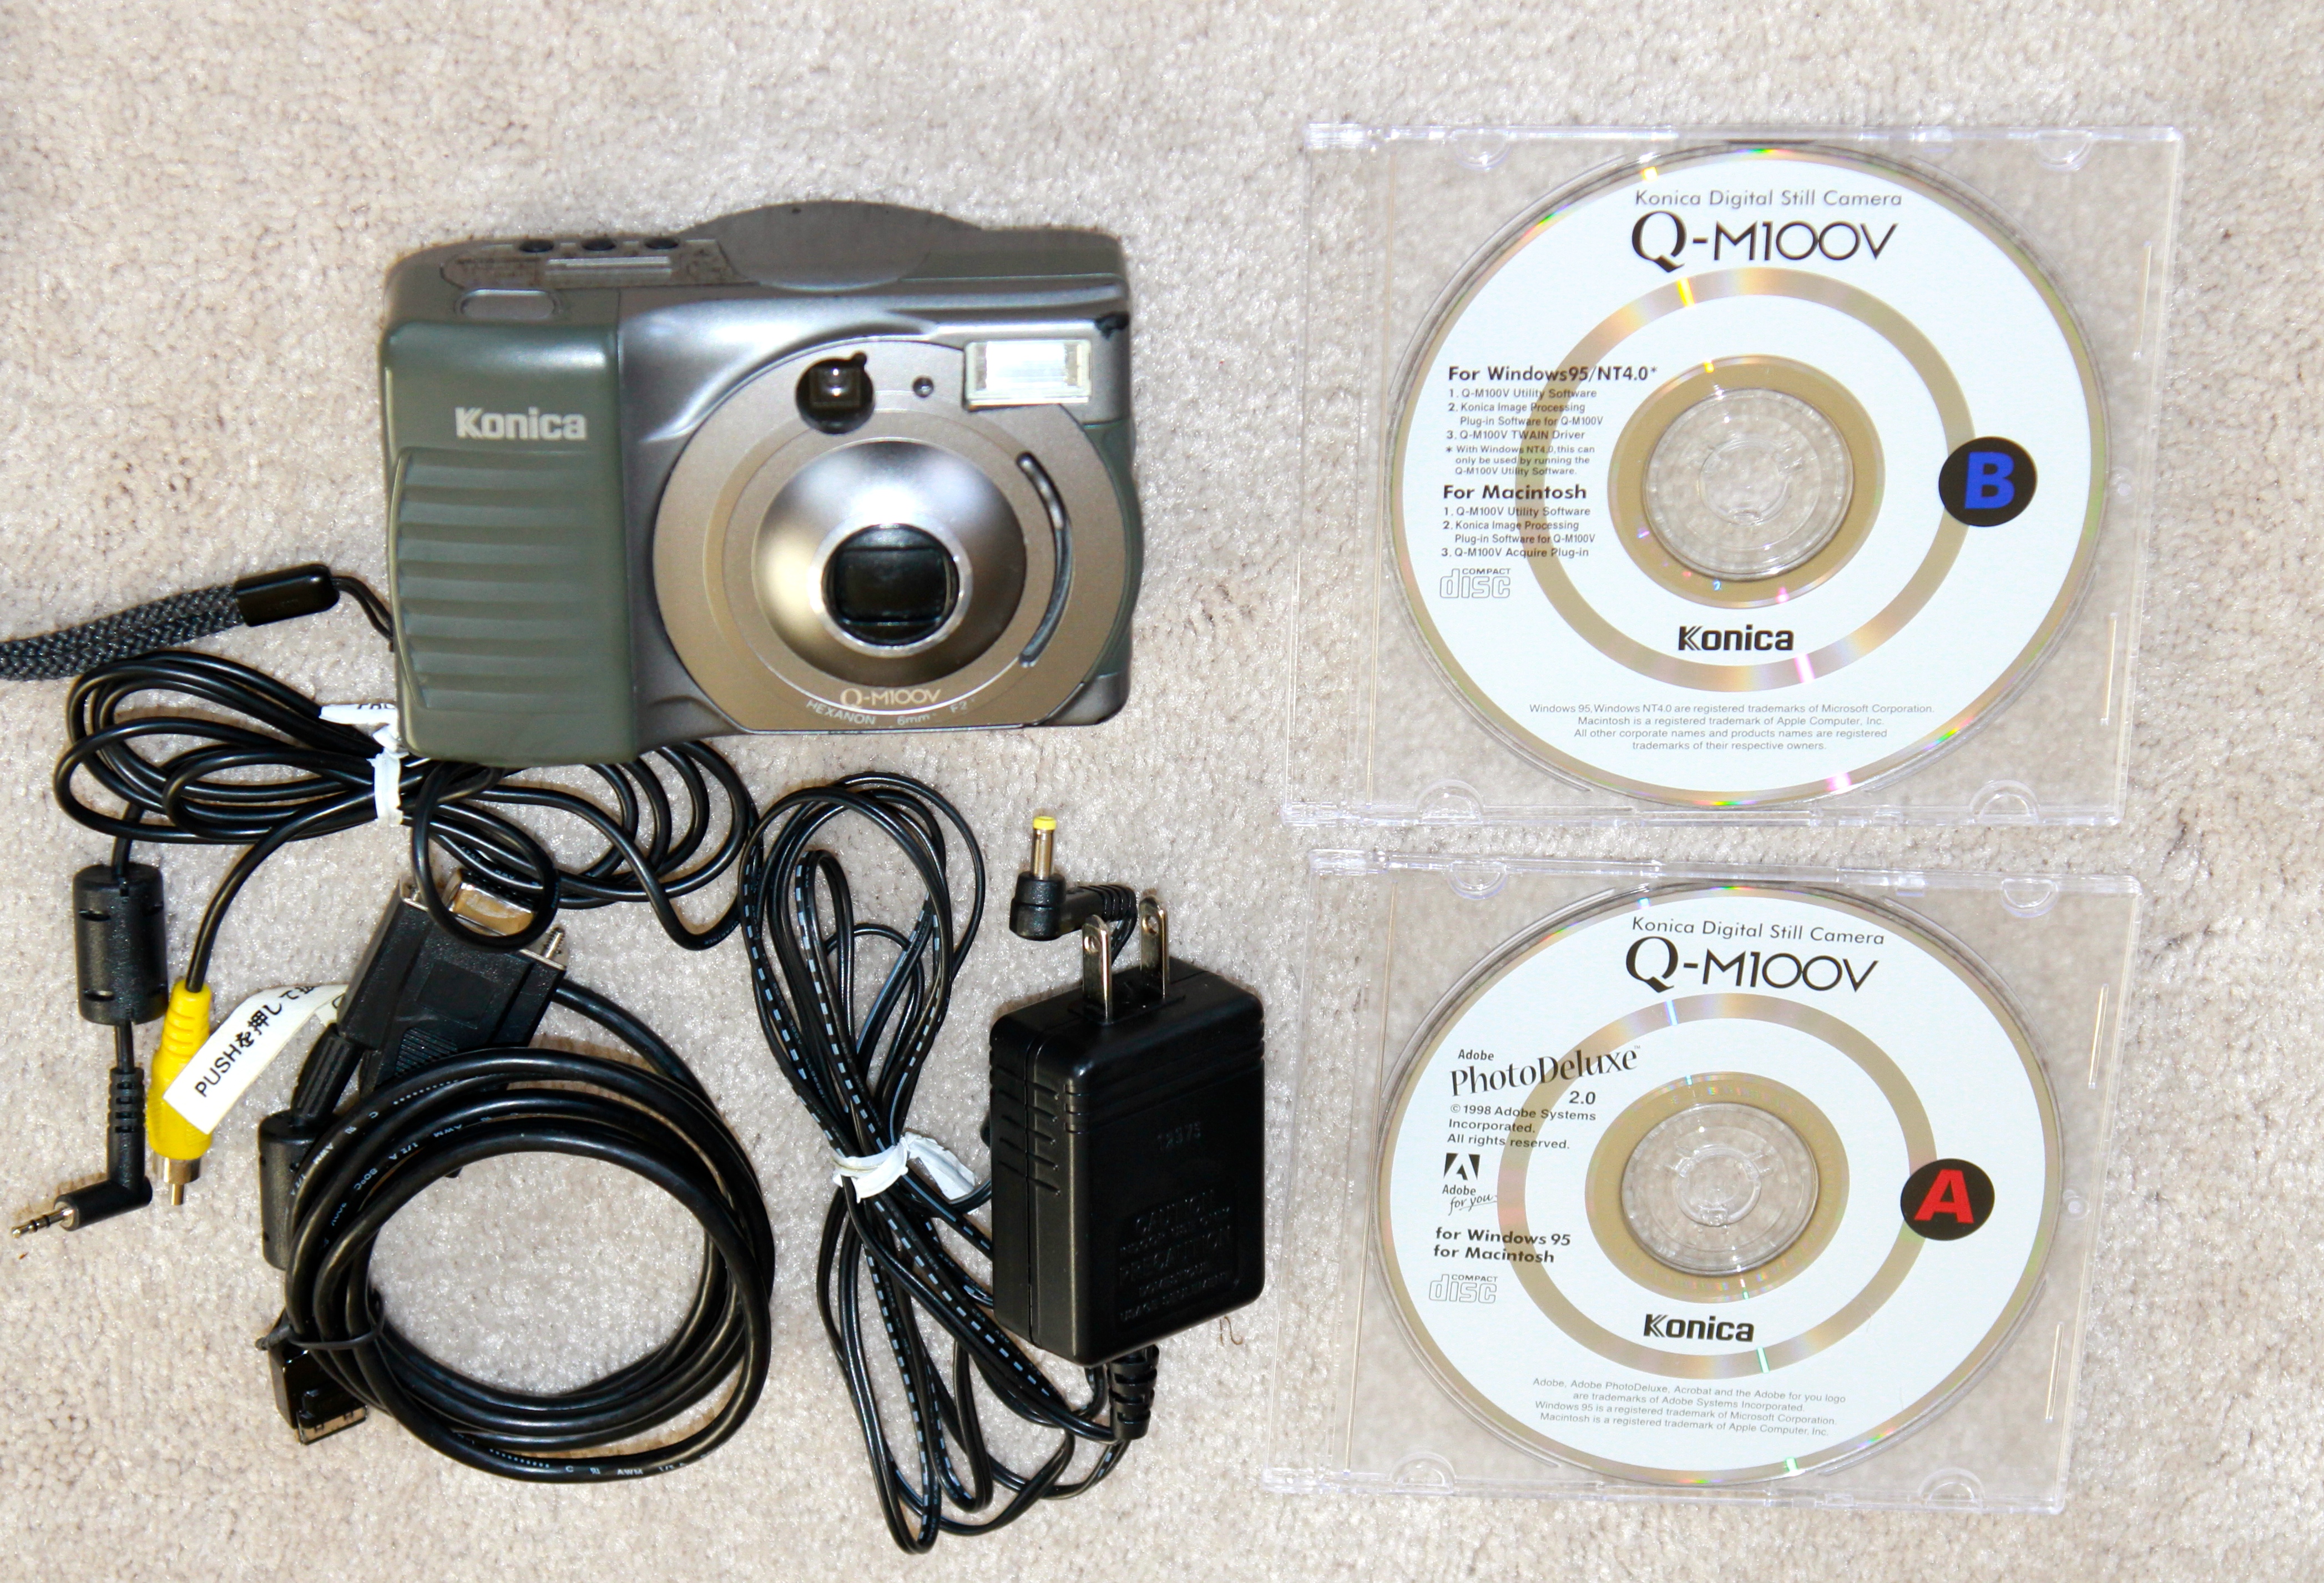 Konica QM-100V digital camera